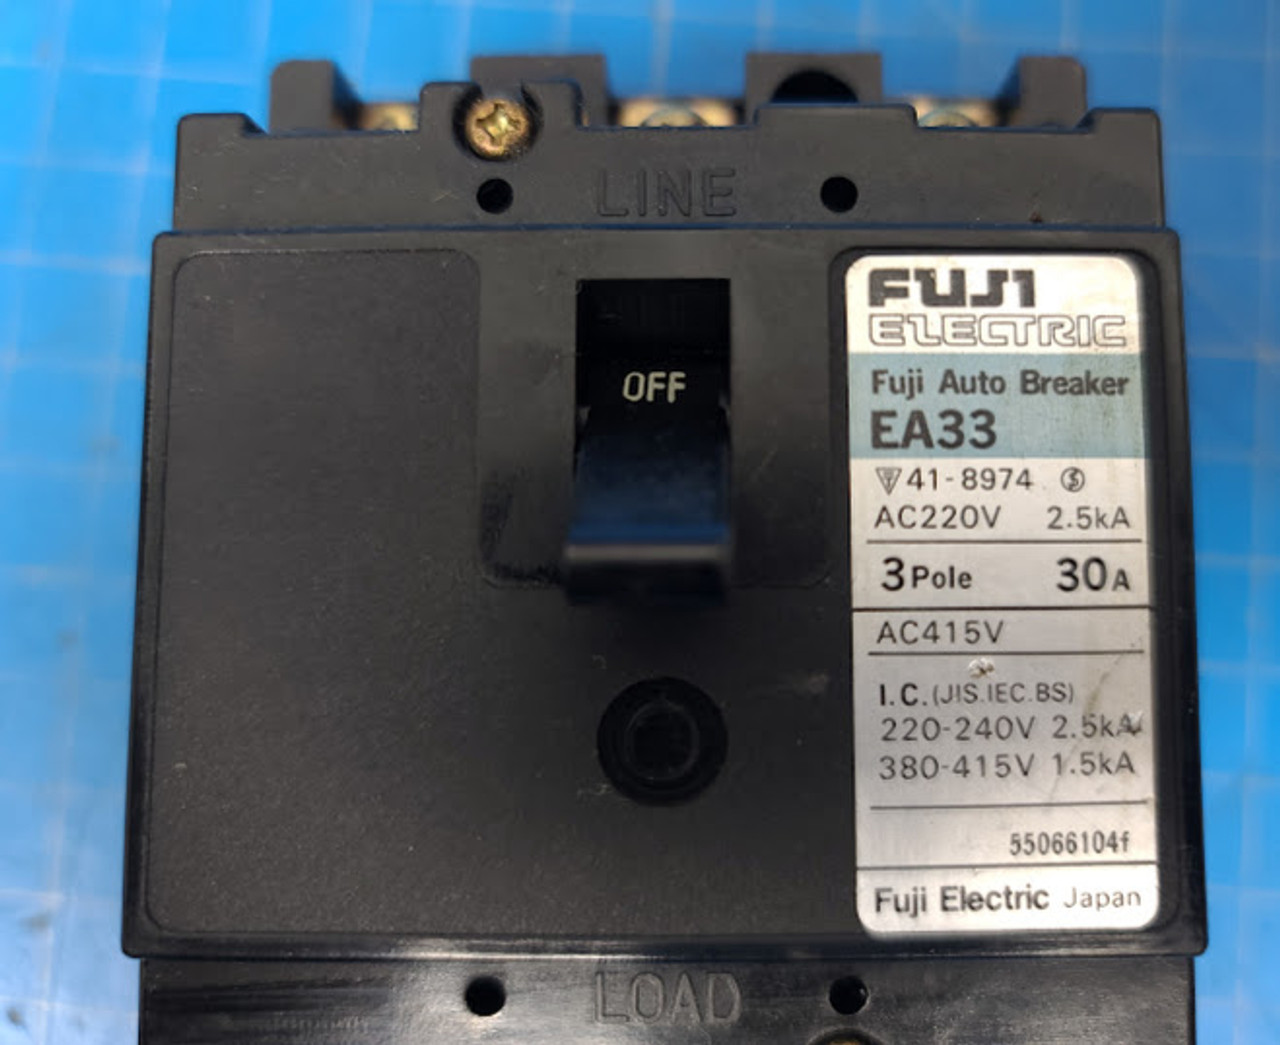 Fuji Electric 3 Pole 30 Amp 220-240V Circuit Breaker EA33